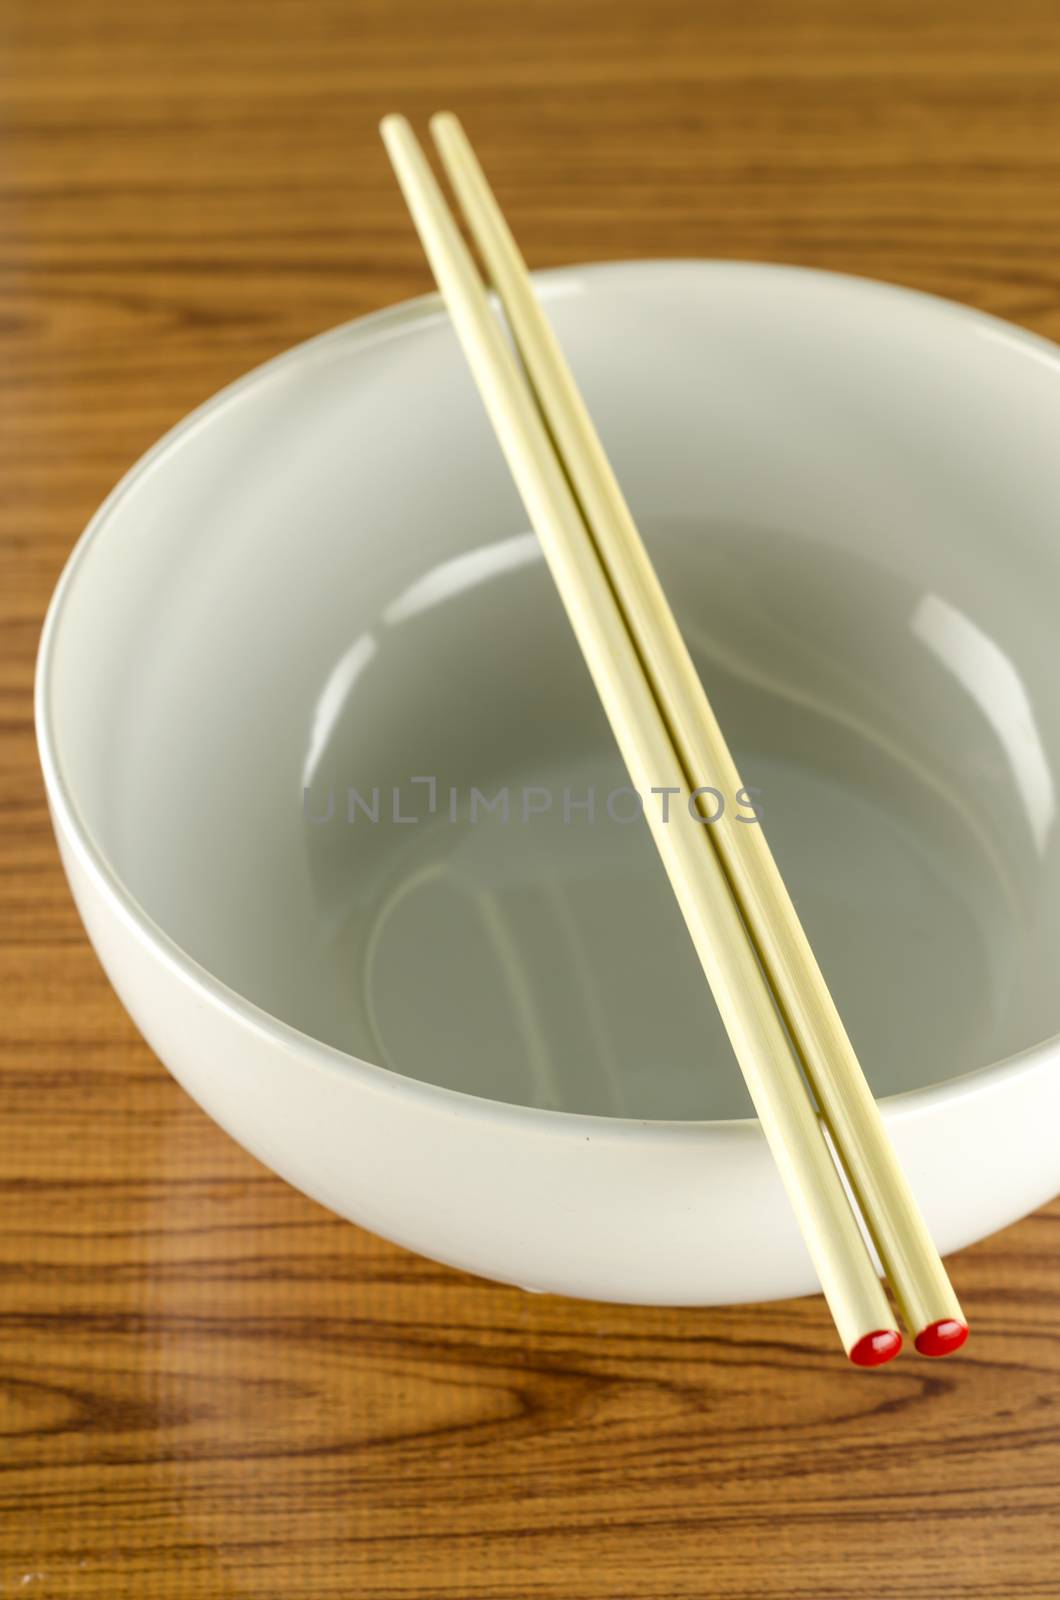 empty white bowl with chopstick by ammza12